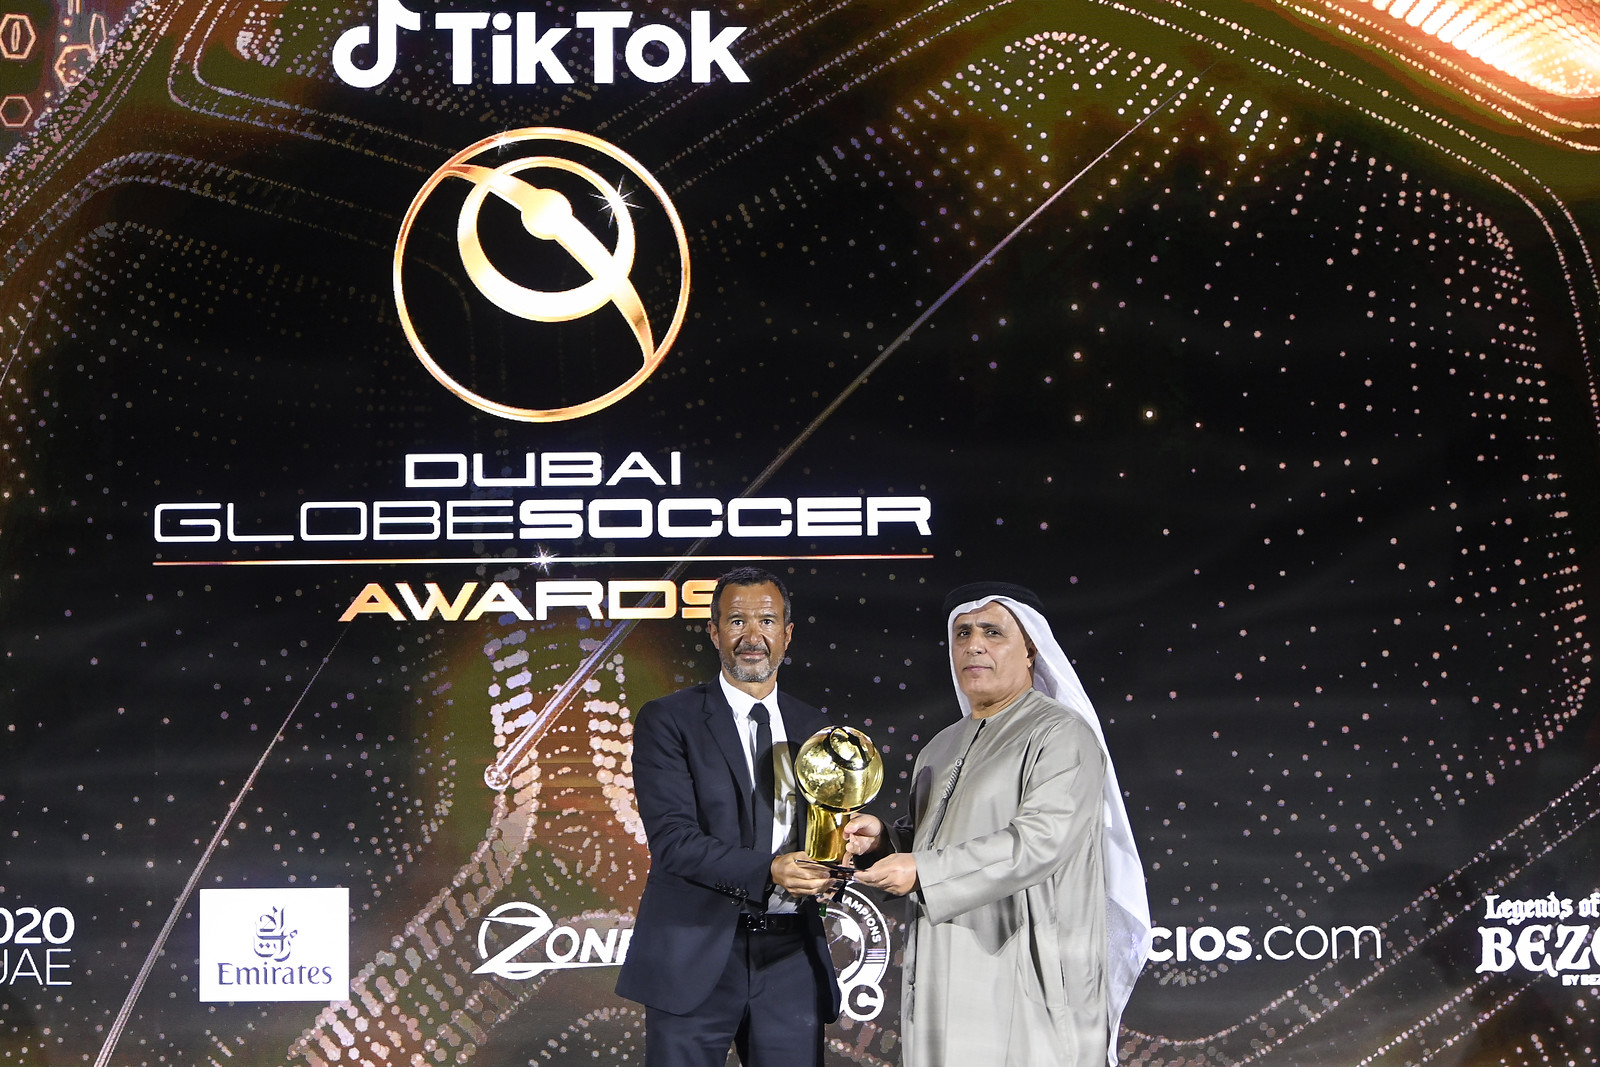 Dubai Globe Soccer Awards 2021 - Tredicesima Edizione